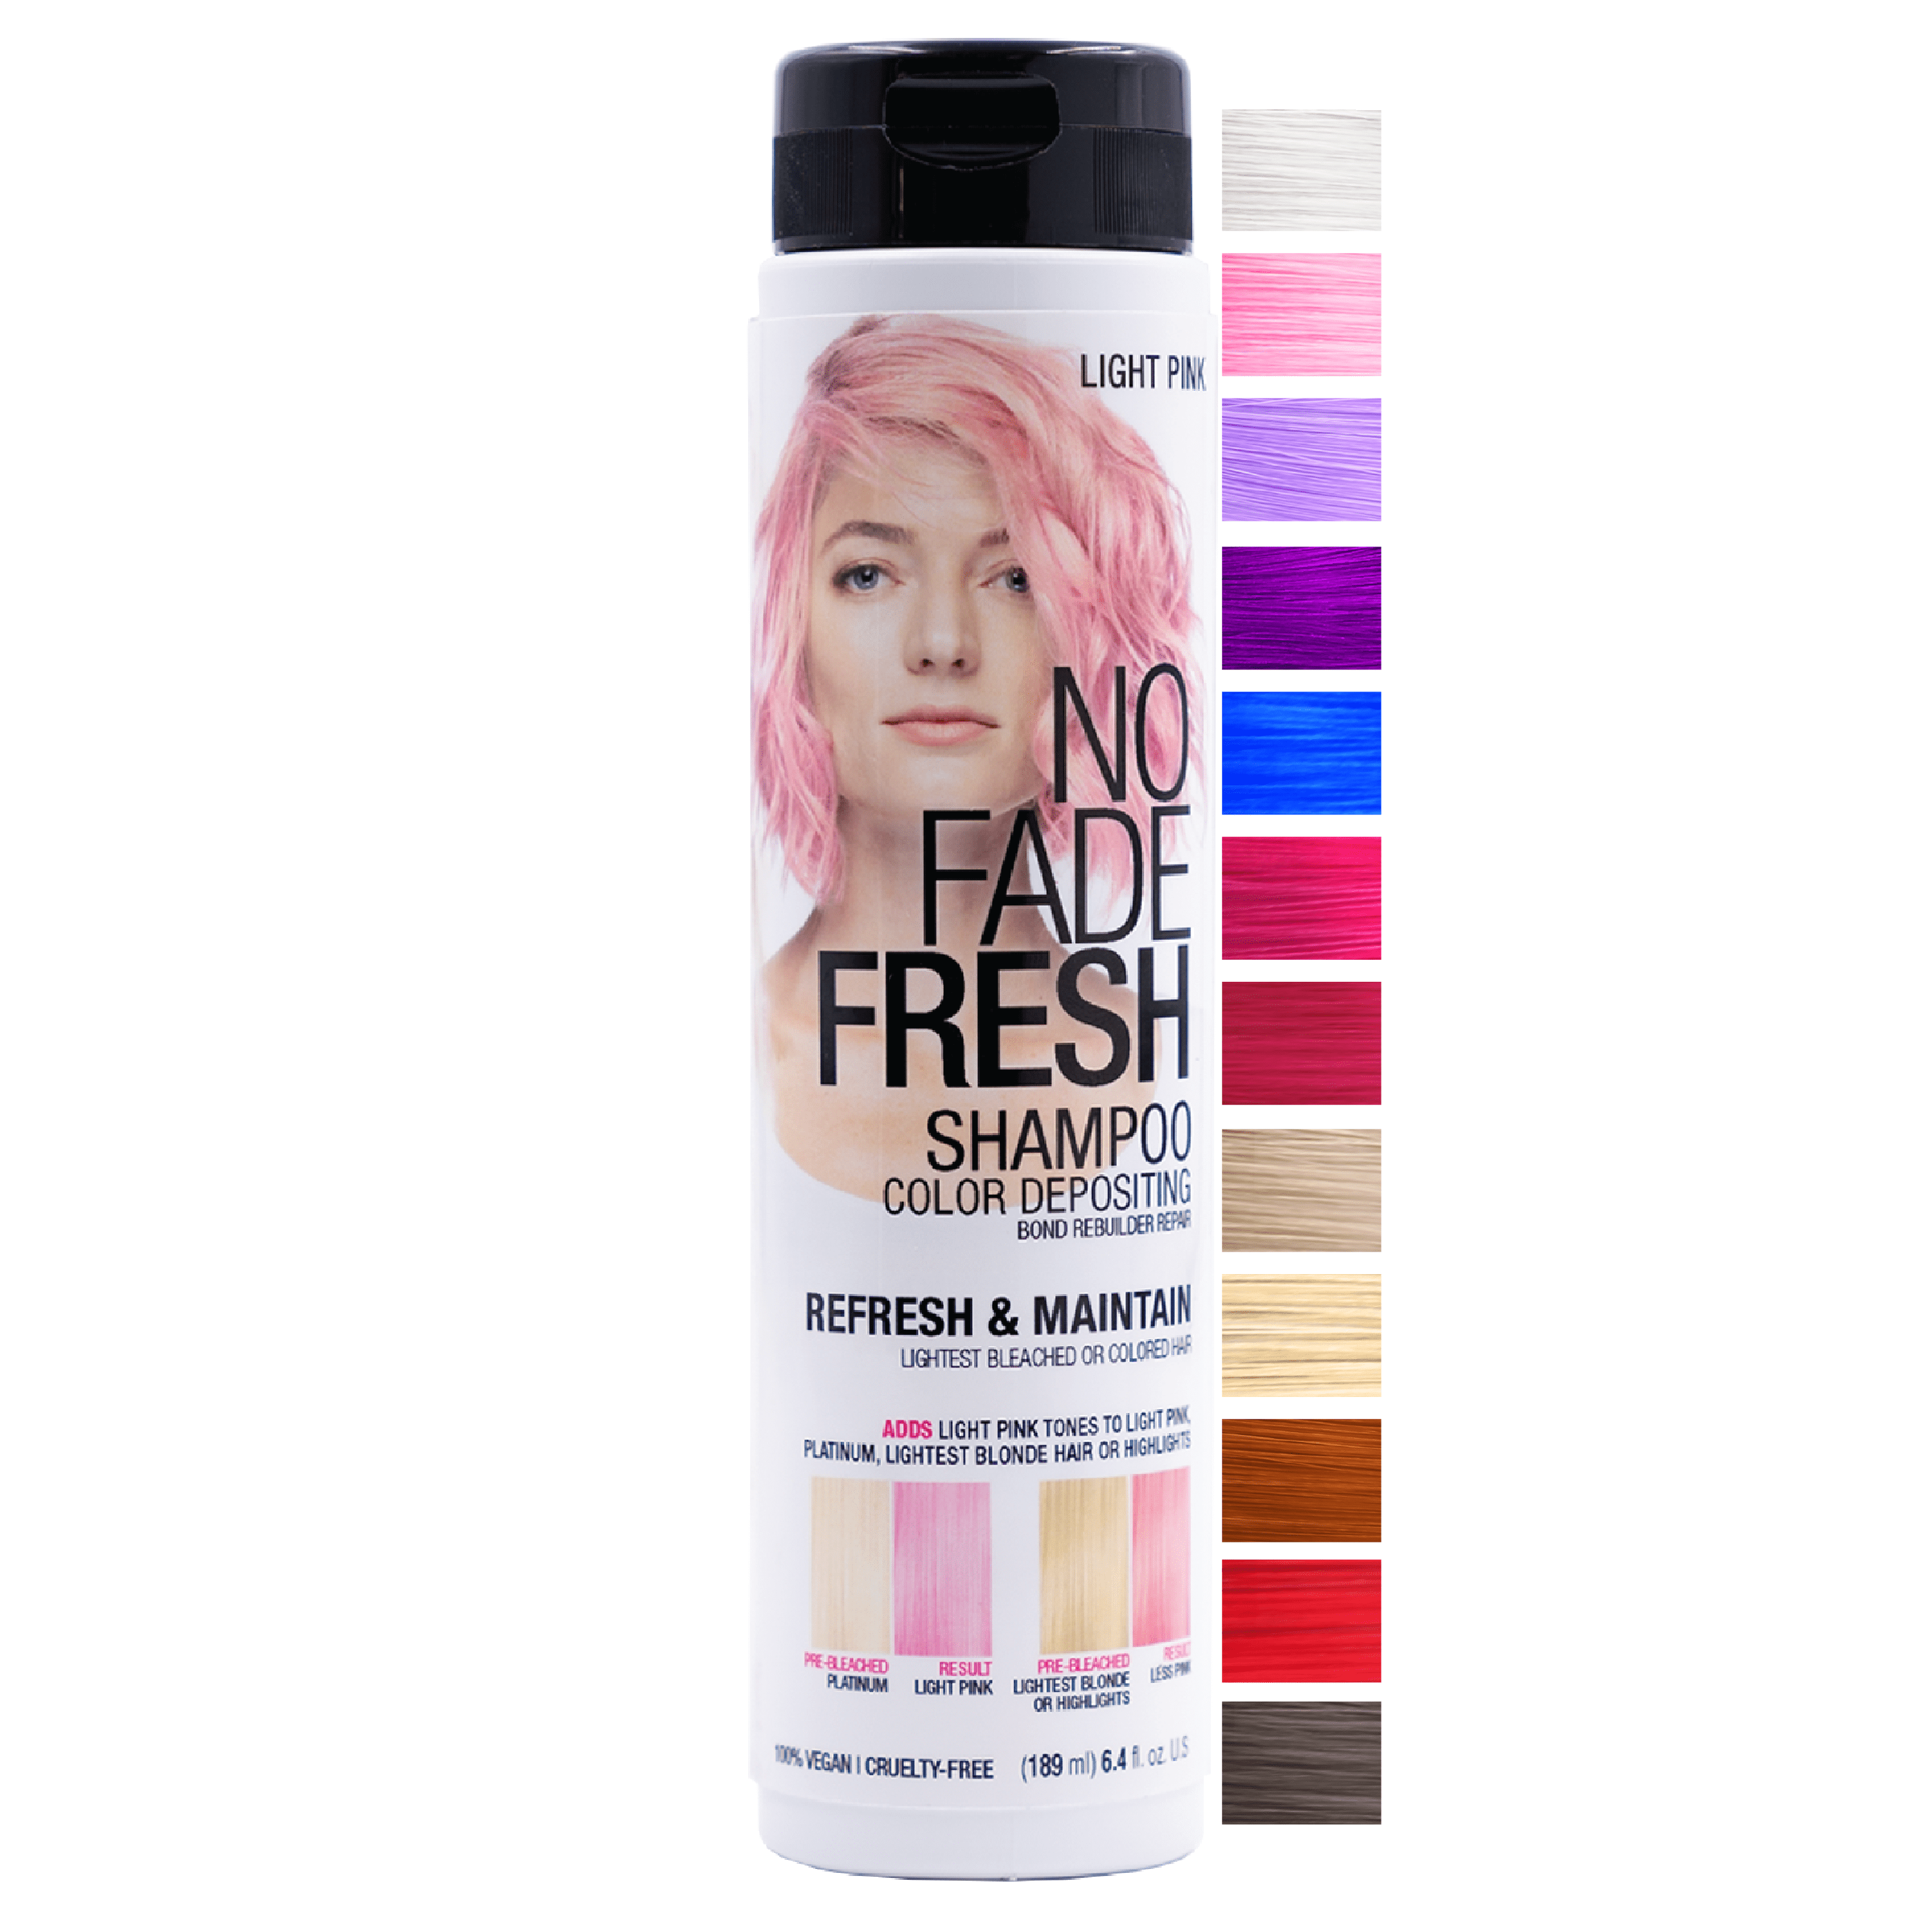 No Fade Fresh Shampoo, Light Pink, Color Depositing - 189 ml